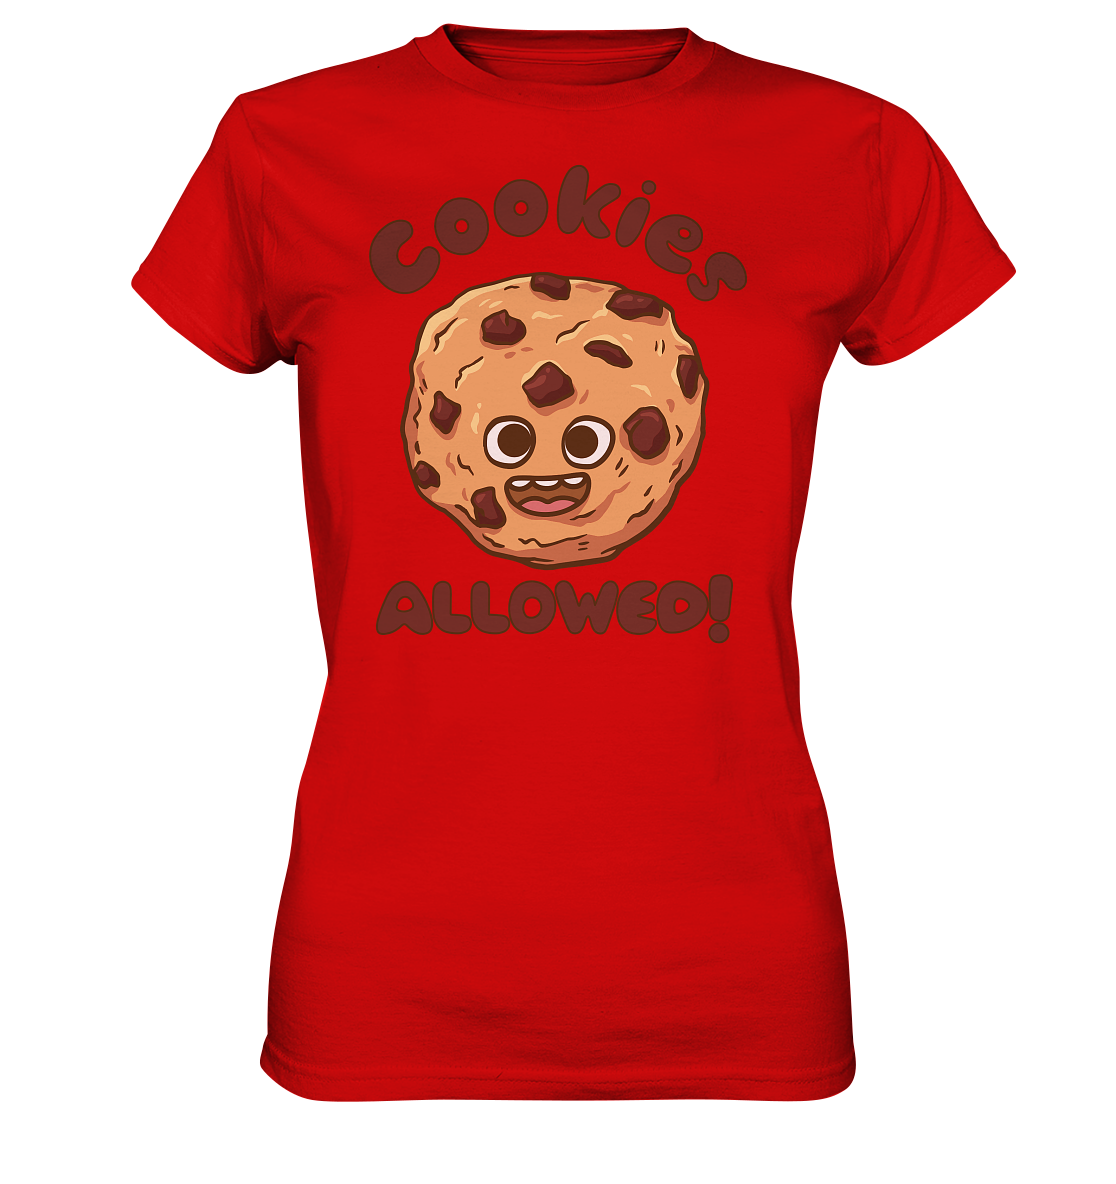 Cookies allowed! - Ladies Premium Shirt